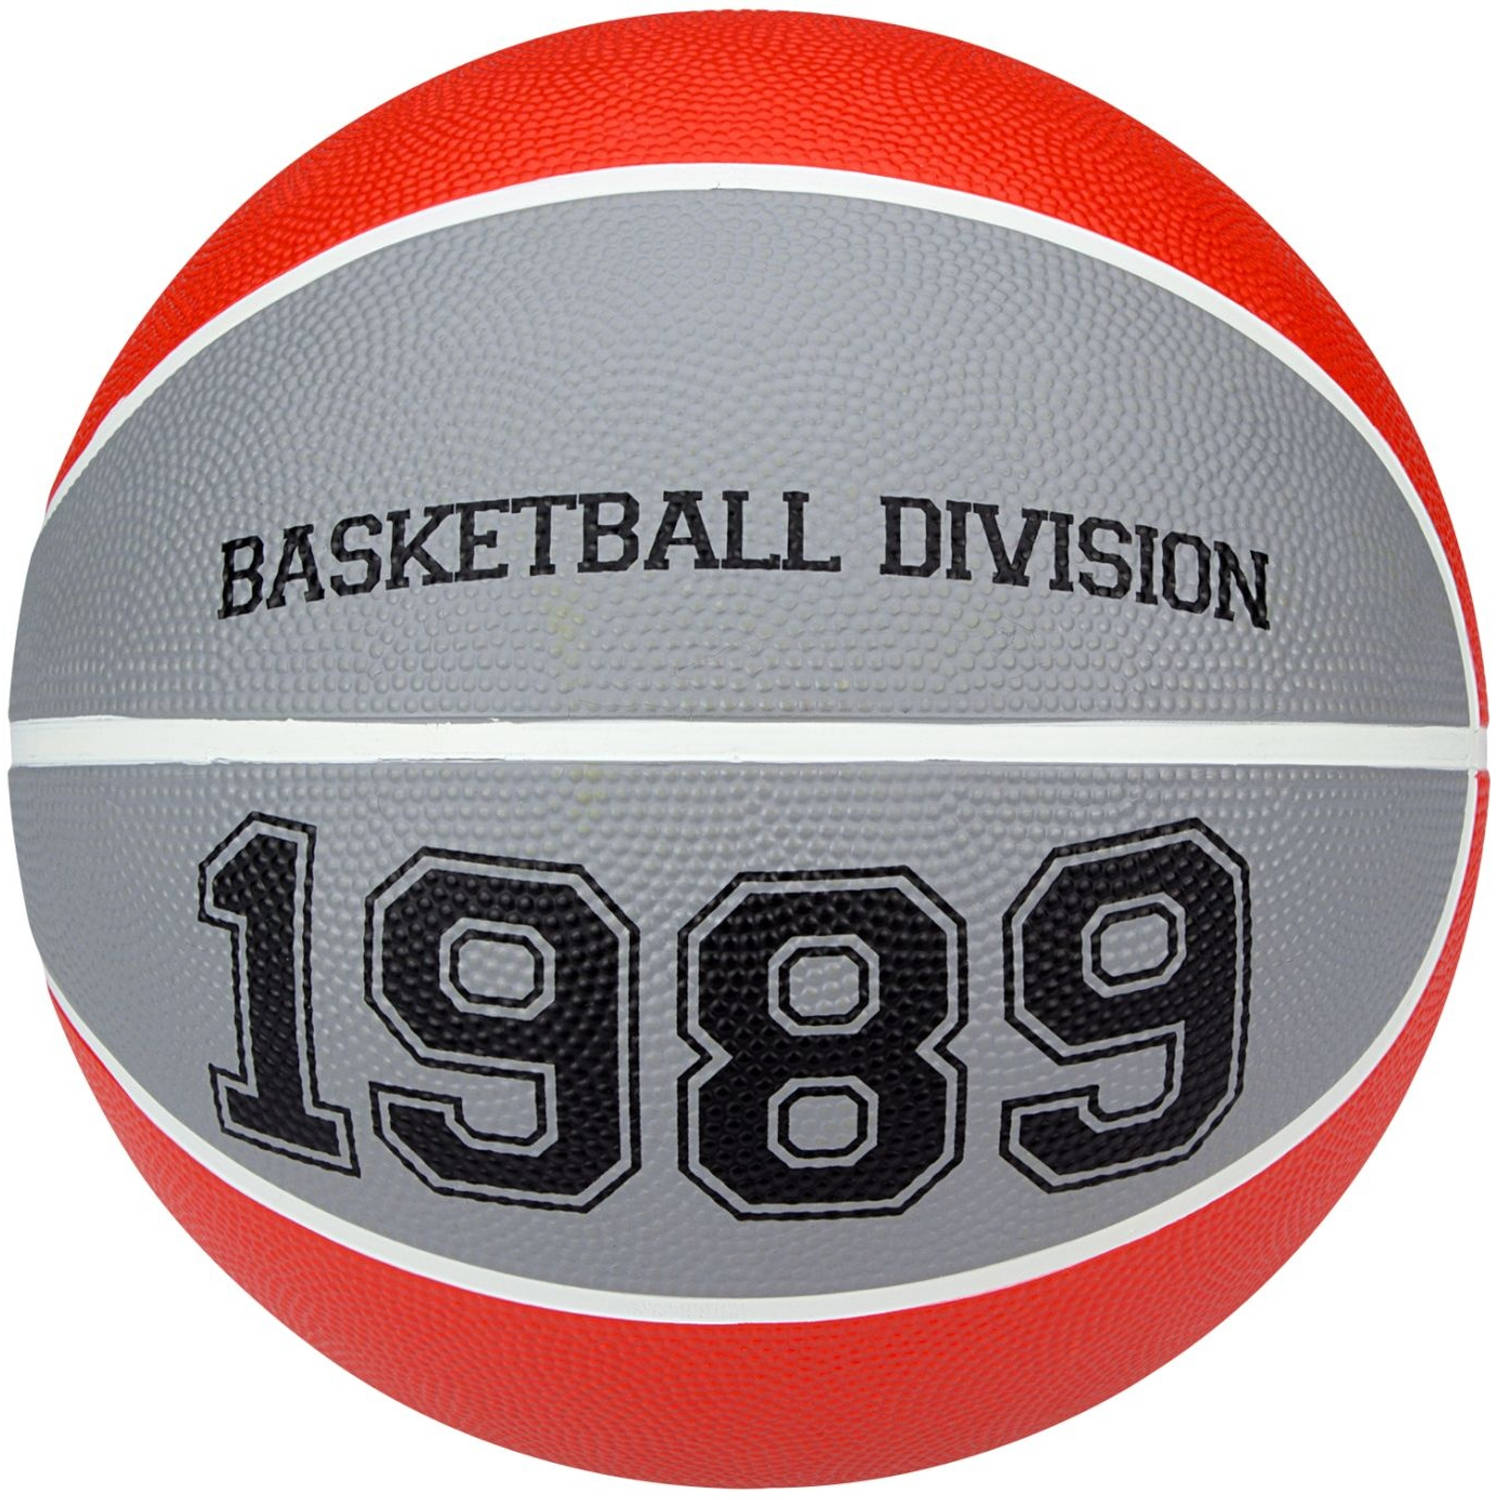 New Port basketbal Division rood/grijs maat 5